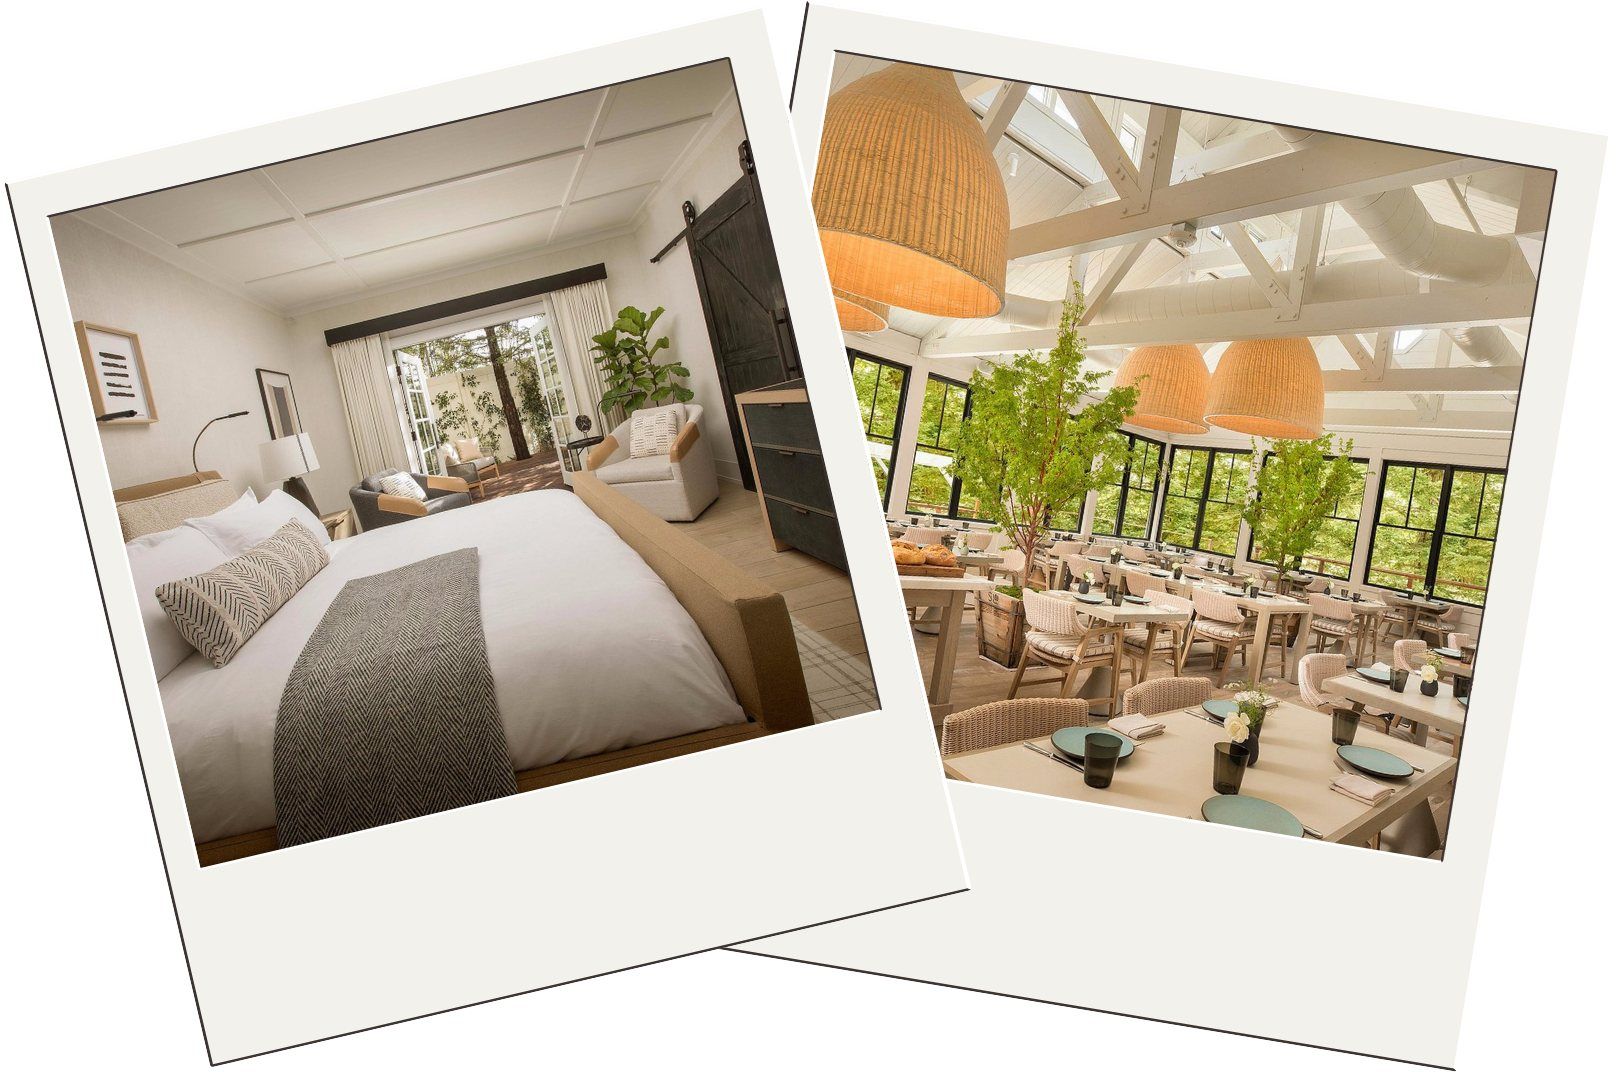 Sonoma luxury hotels